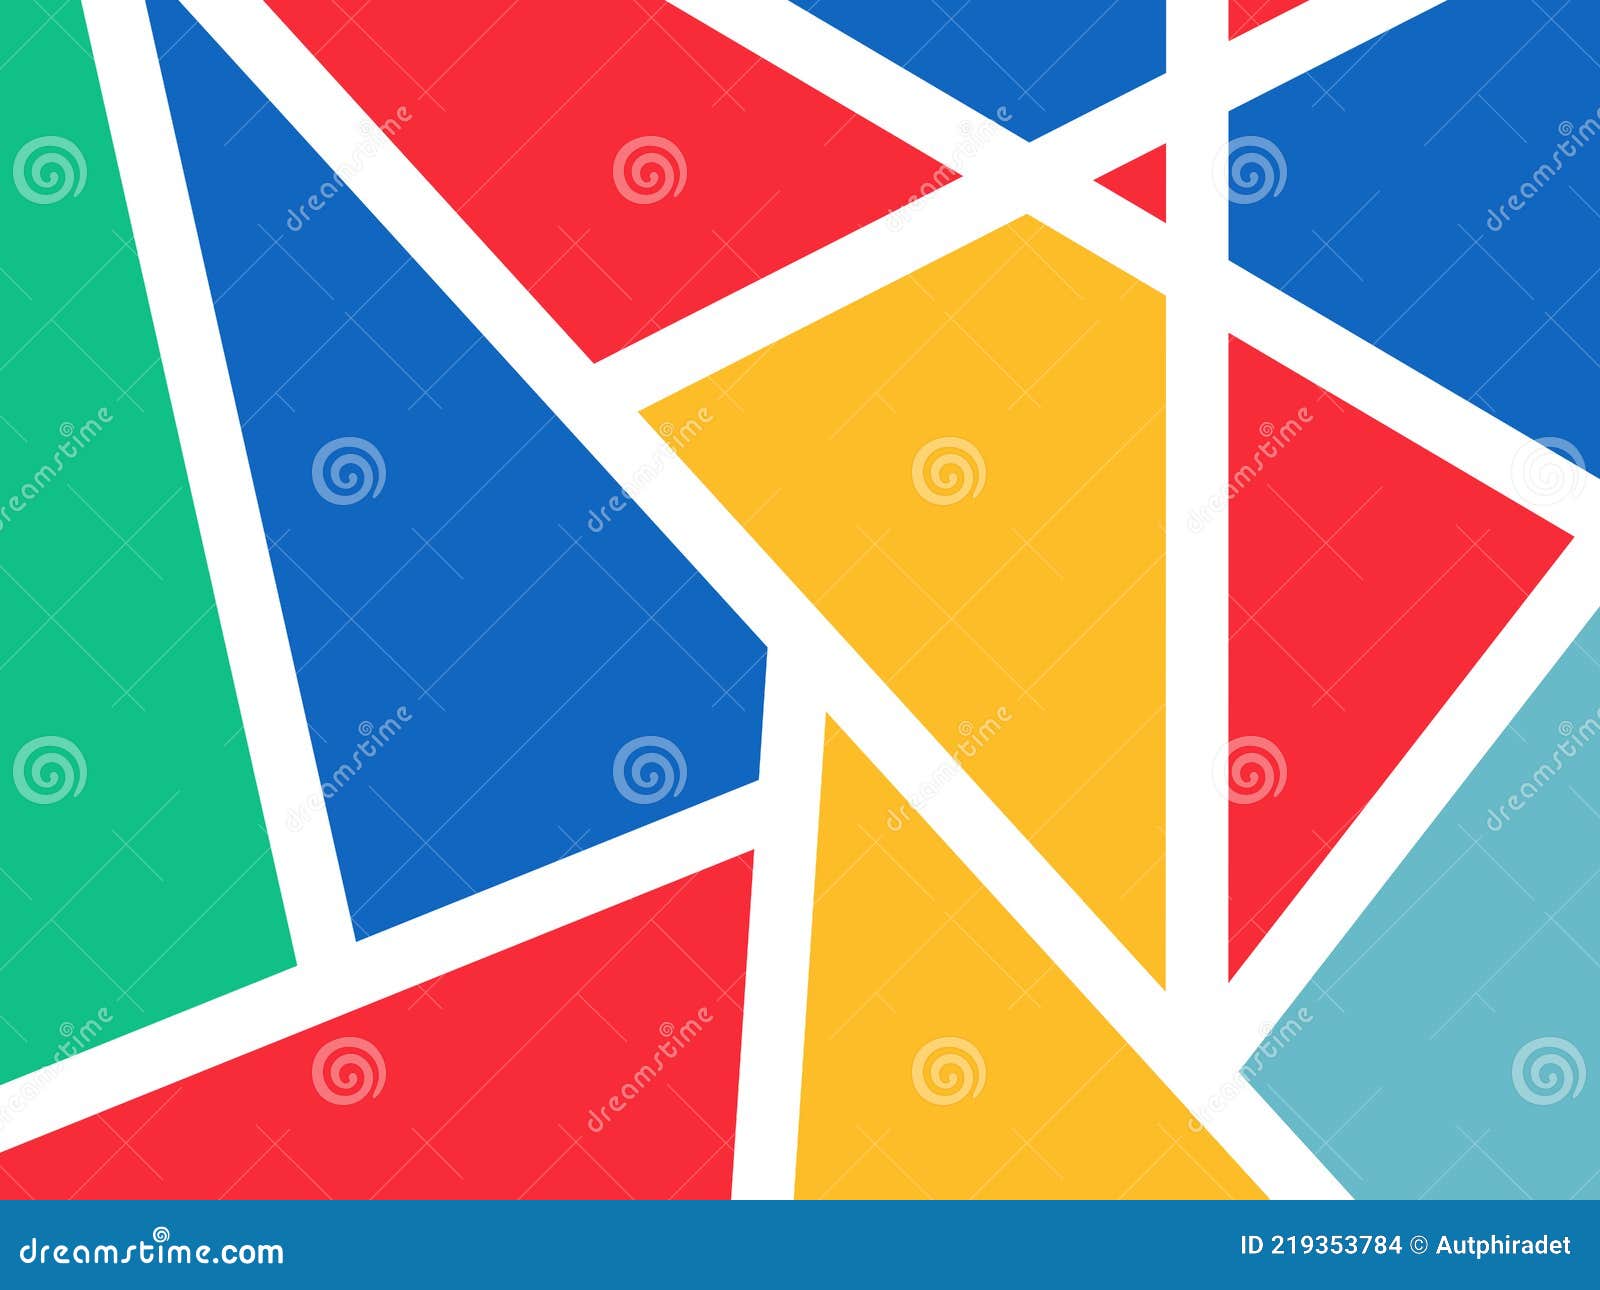 https://thumbs.dreamstime.com/z/colorful-abstract-geometric-pattern-simple-design-shape-modern-background-web-banner-poster-branding-wallpaper-vector-219353784.jpg